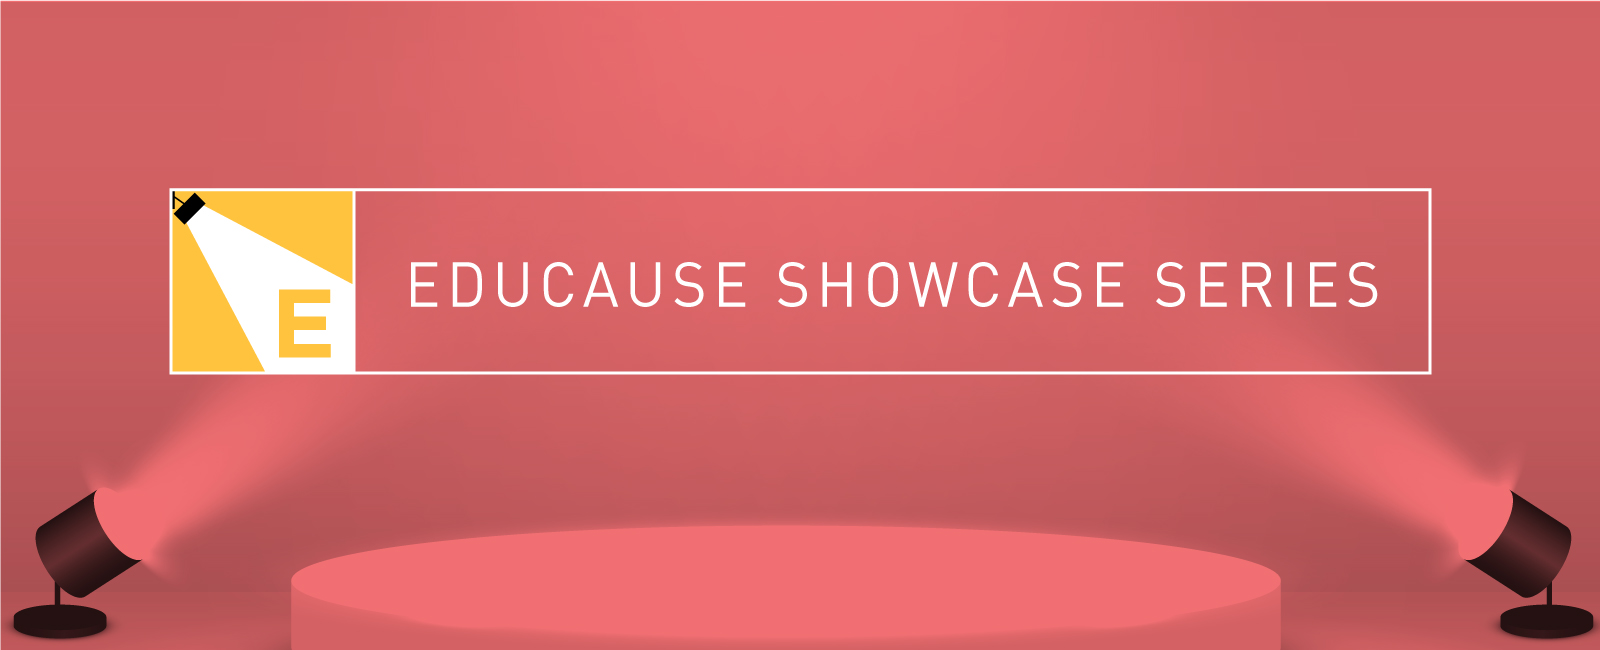 EDUCAUSE Showcase Series